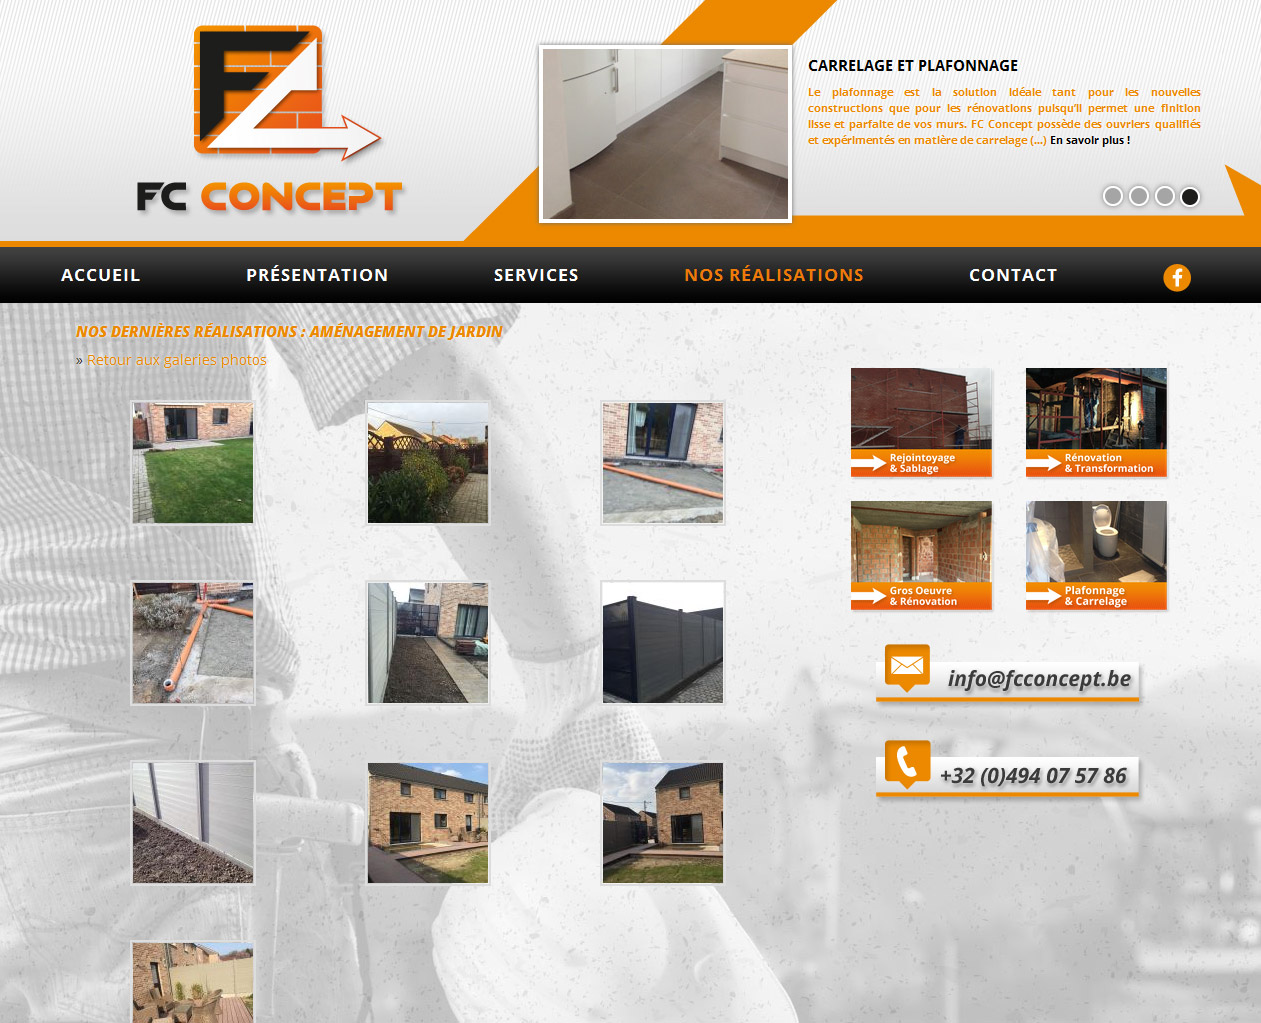 FC Concept